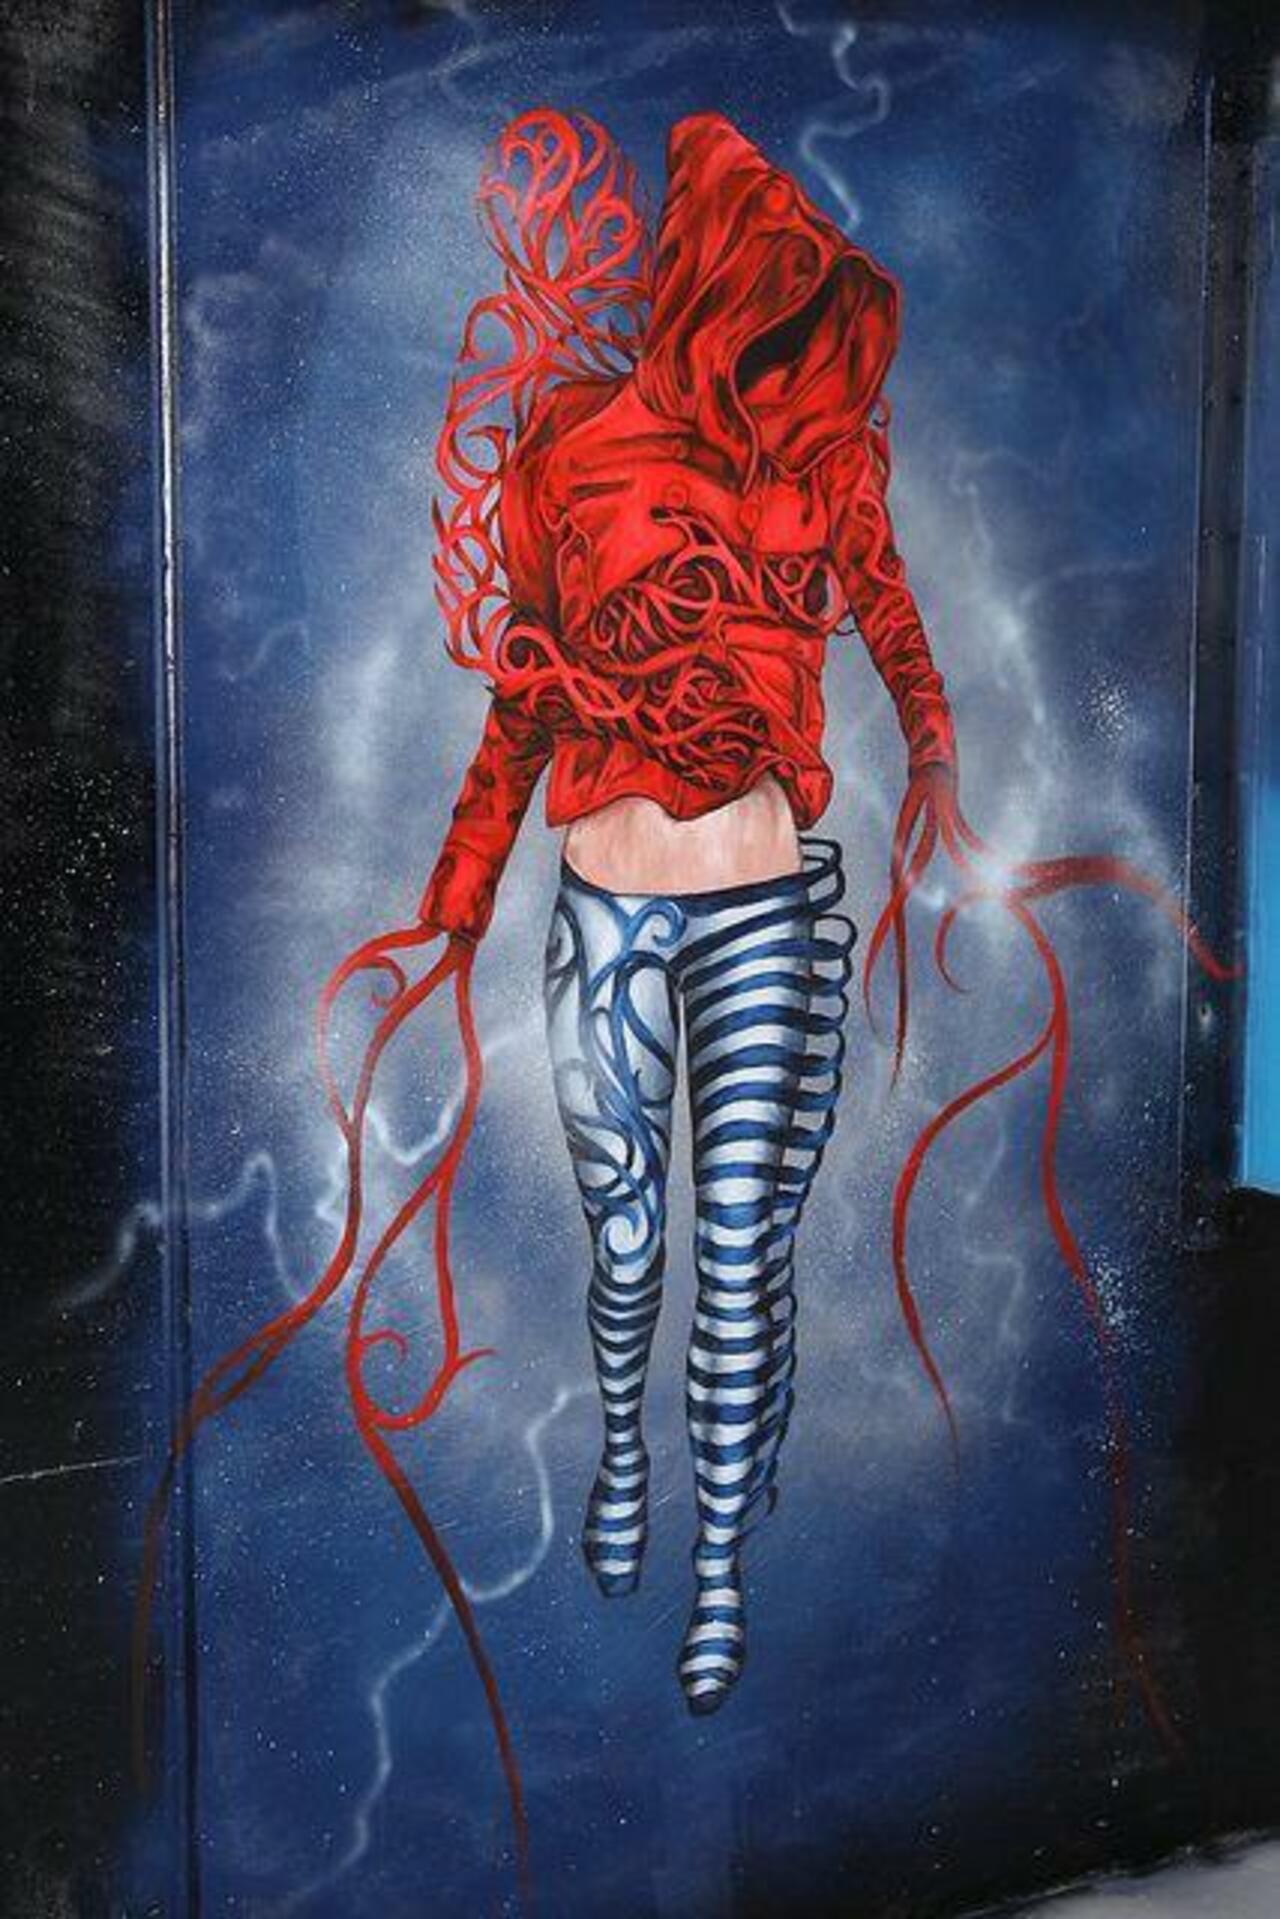 Urban Cake Lady
Australia
#streetart #art #graffiti #mural http://t.co/FEillvGDEs